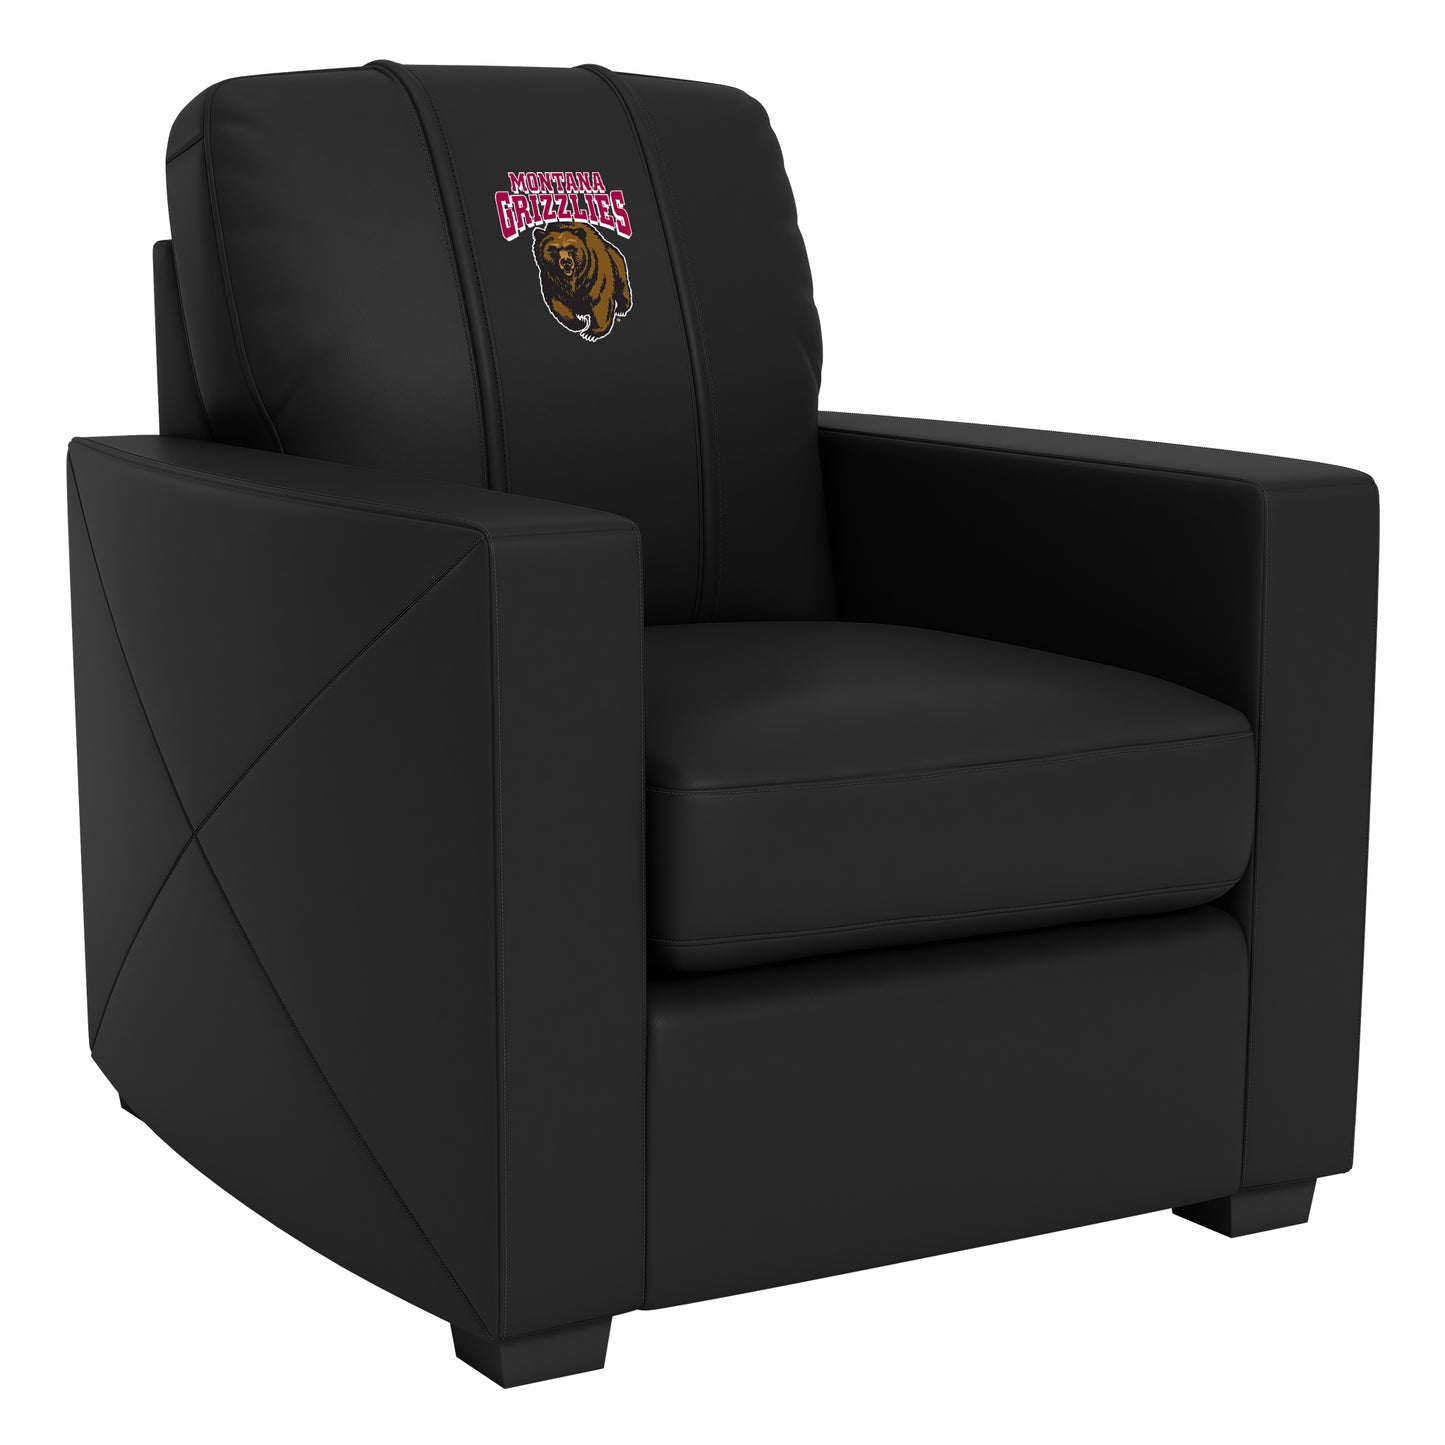 Silver Club Chair with Montana Grizzlies Logo